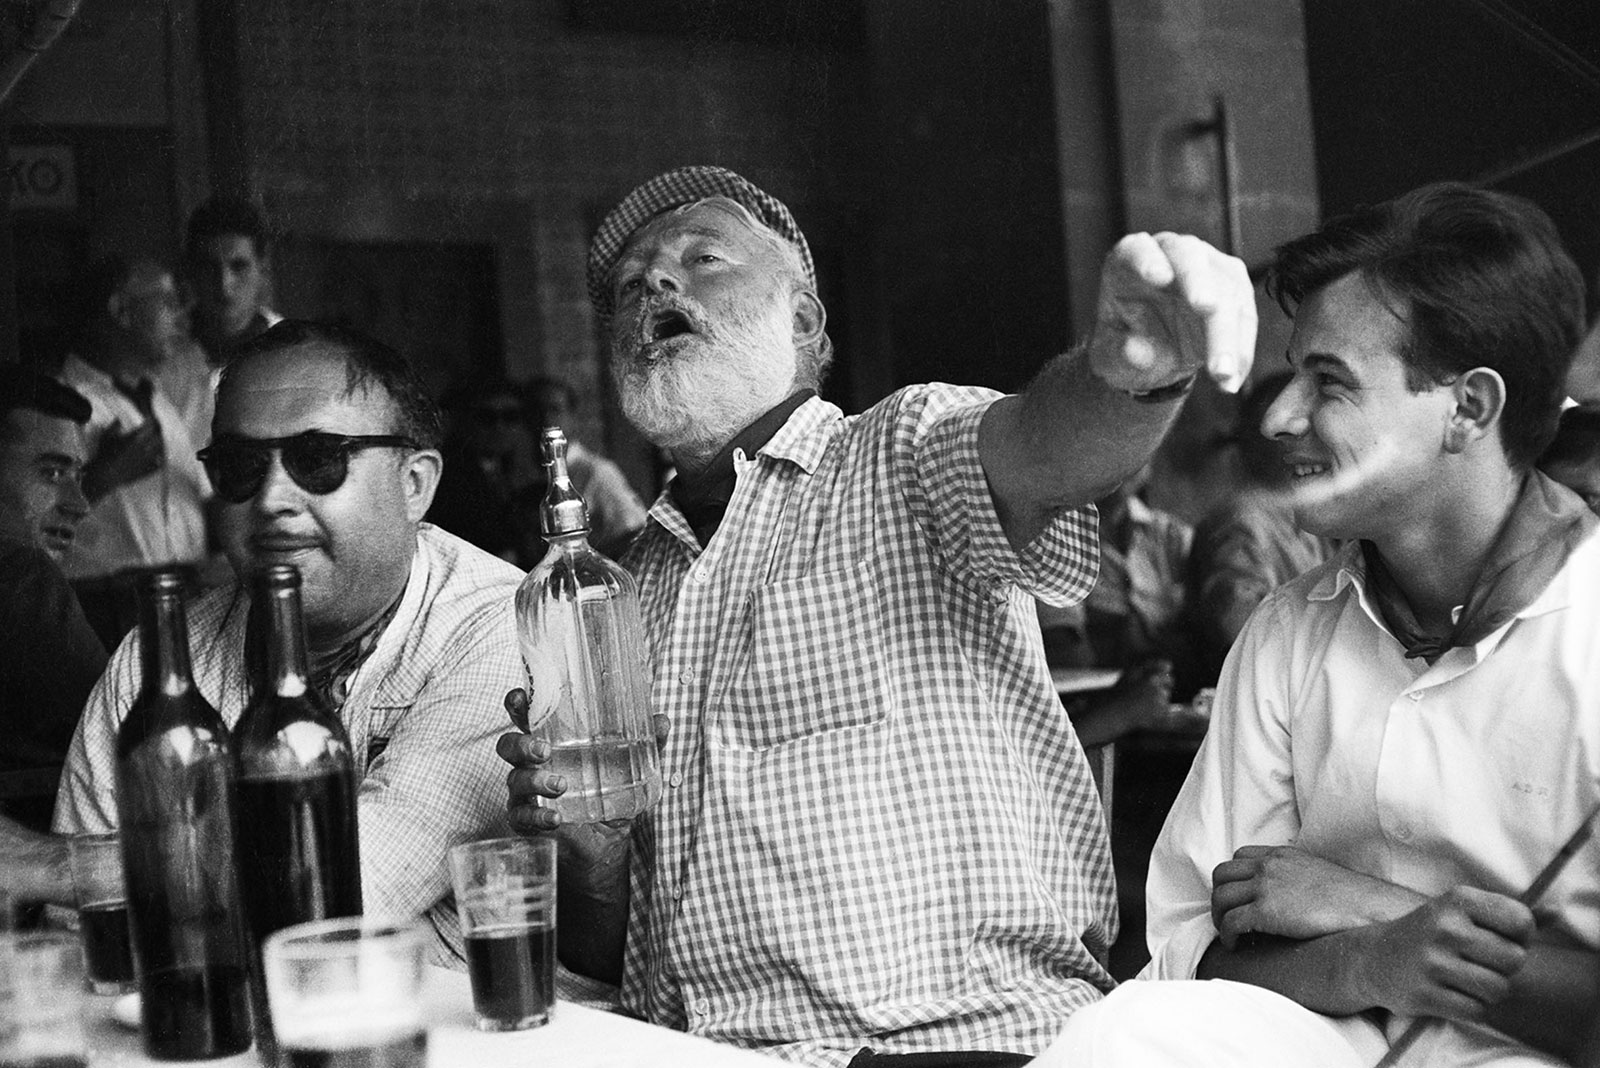 Ernest Hemingway in the bar Floridita in Havana, unknown date